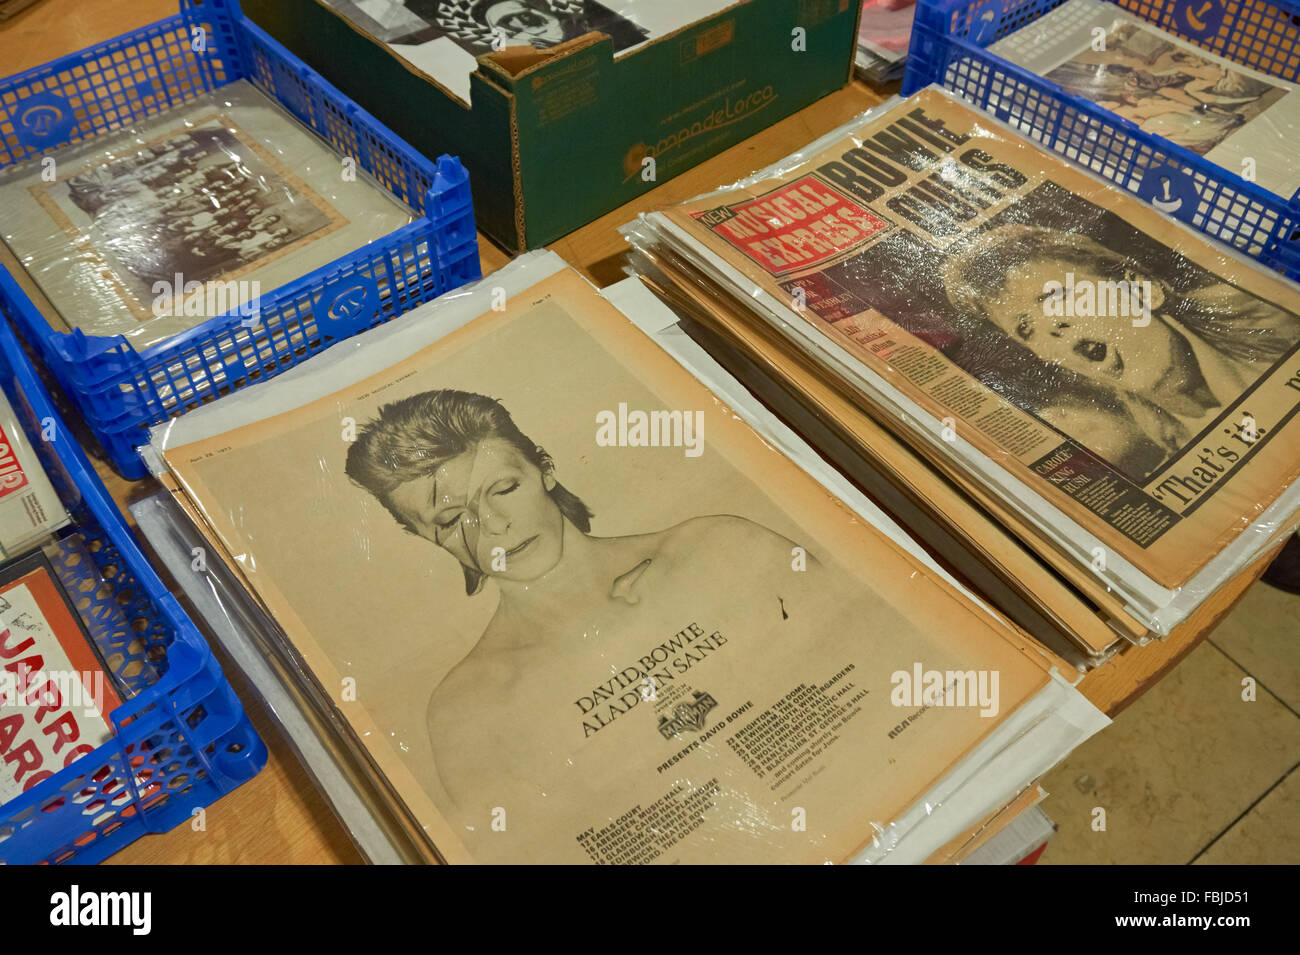 David Bowie memorabilia at Old Dalston Market, London England United Kingdom UK Stock Photo